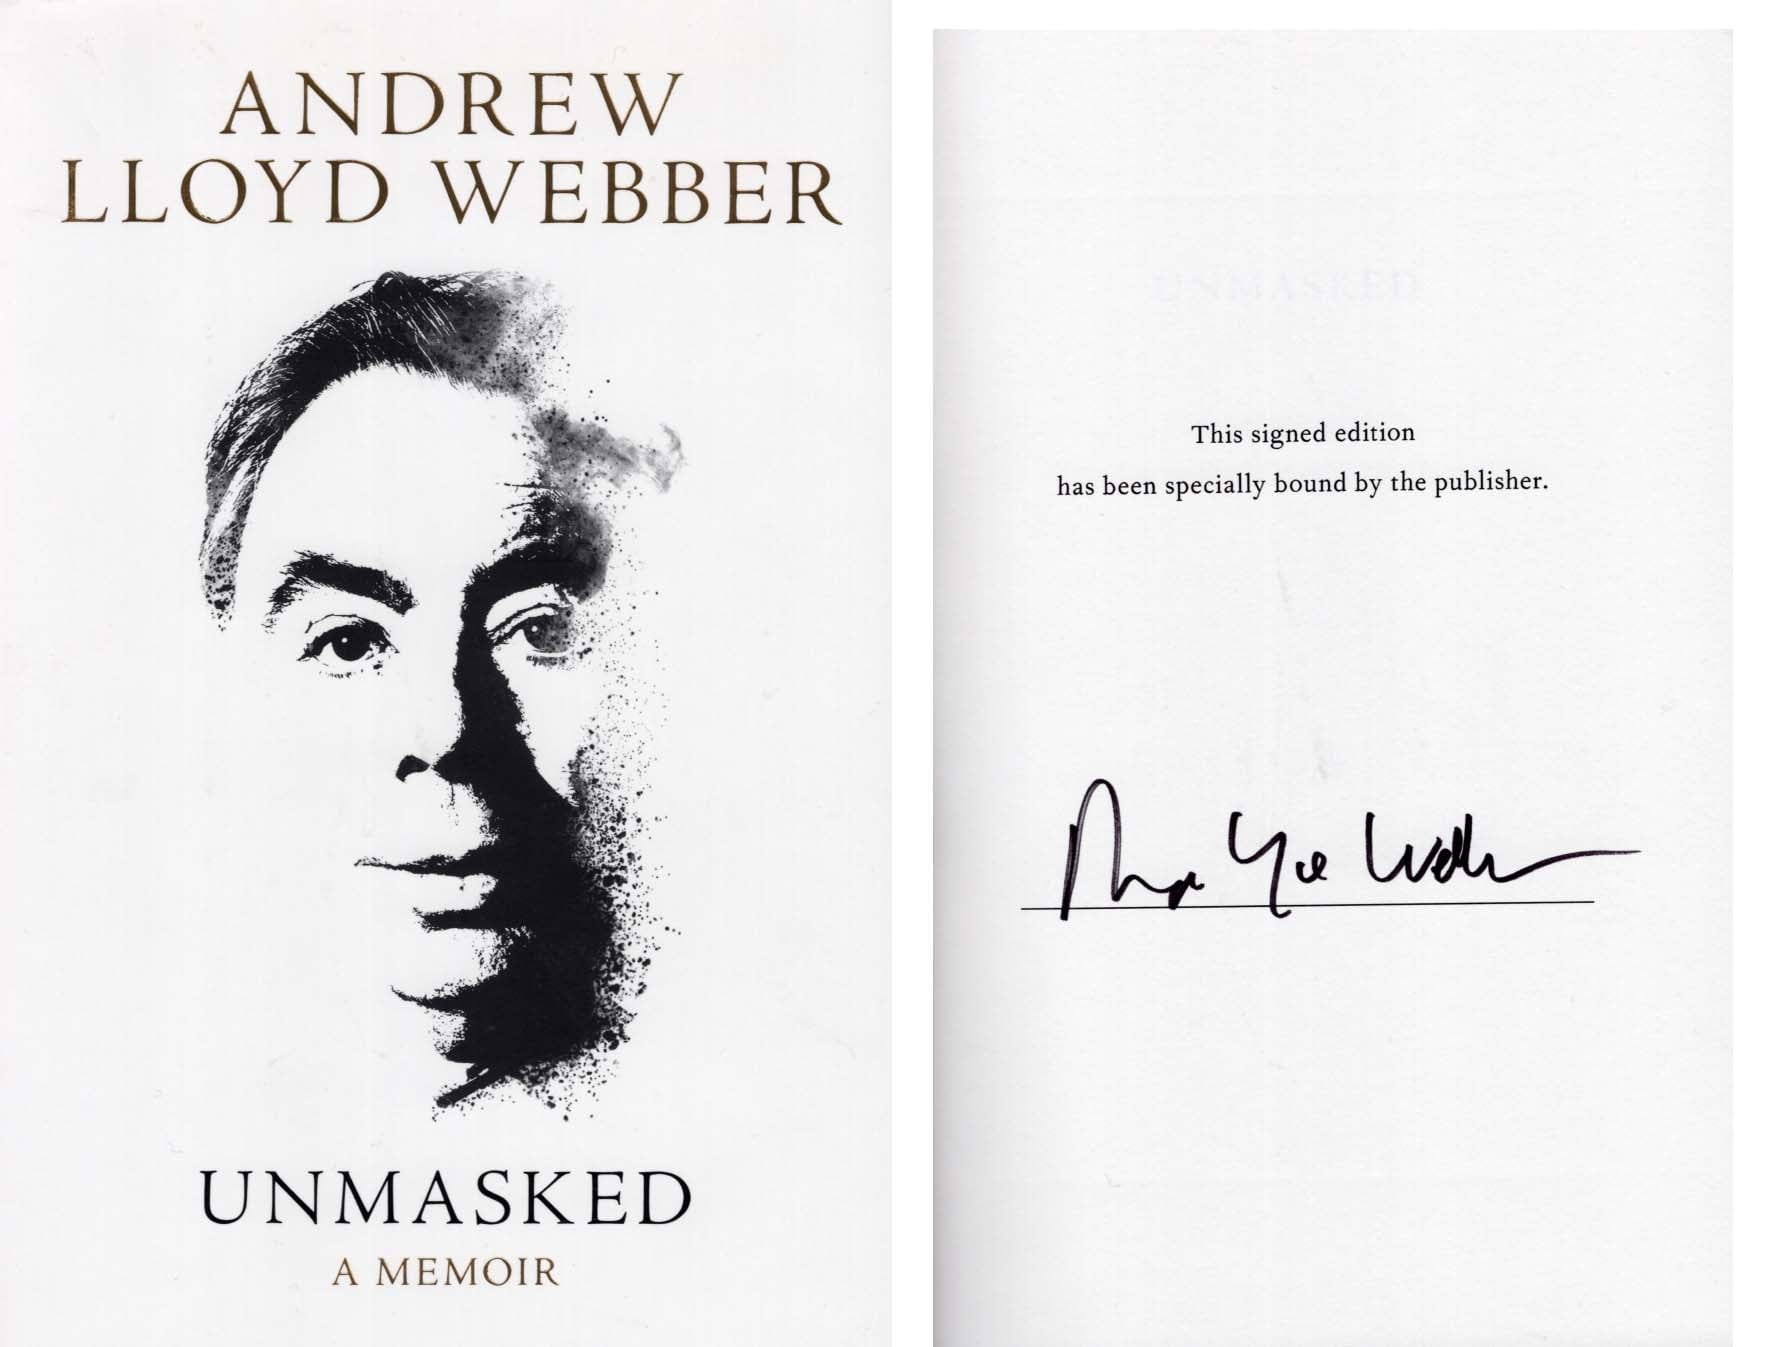 Andrew Lloyd Webber Autograph Autogramm | ID 8123938144405